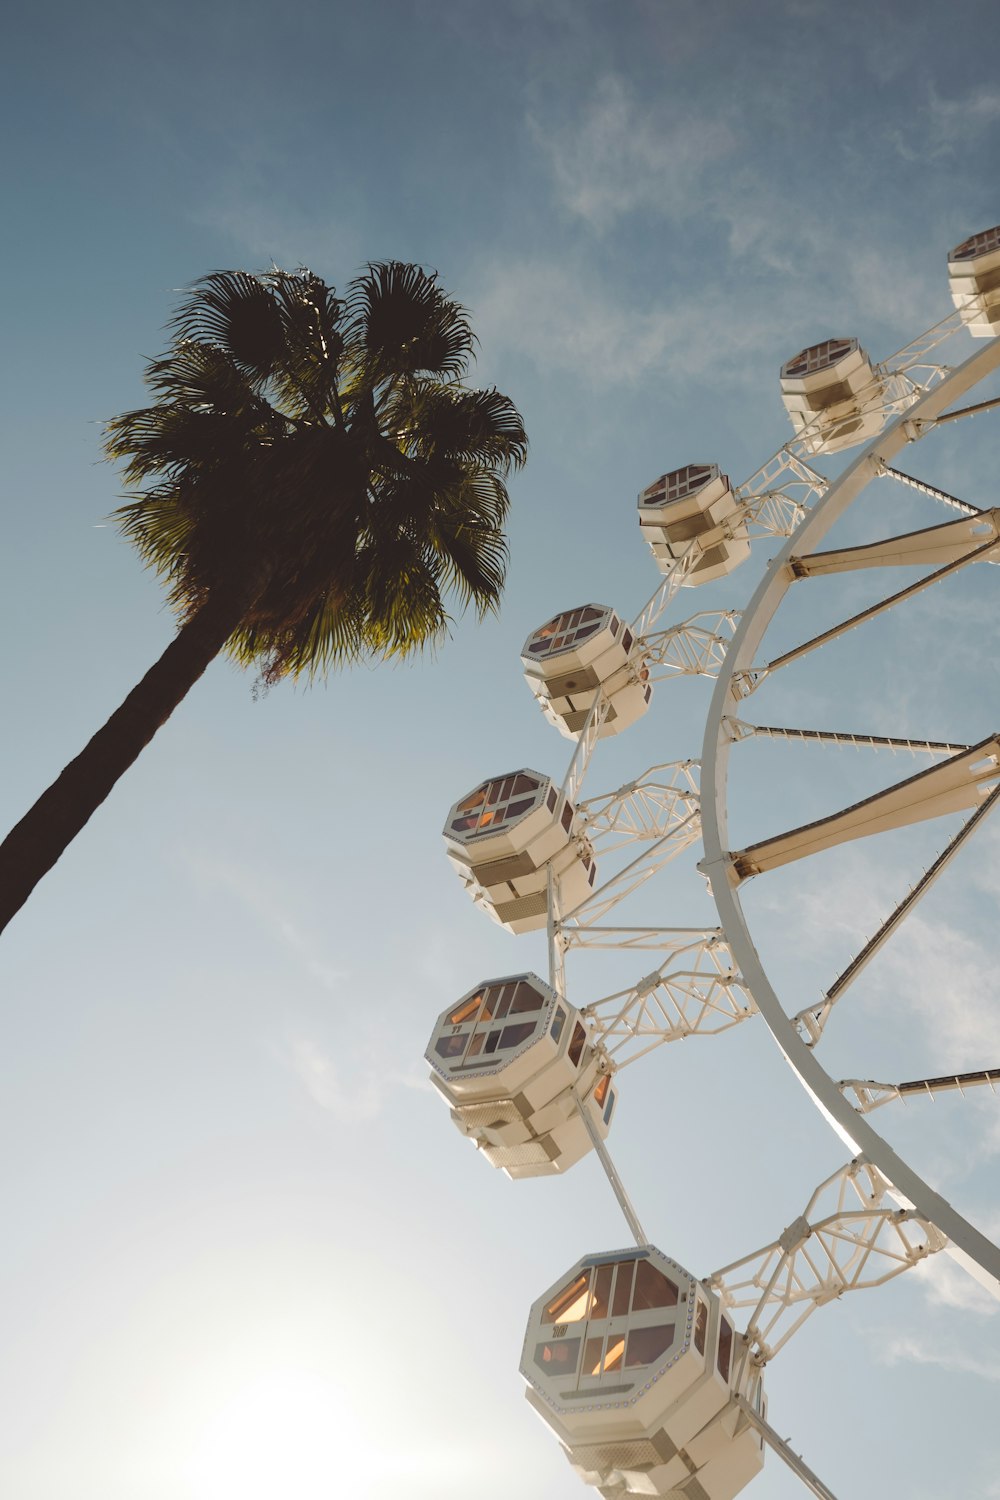 a ferris wheel and a palm tree against a blue sky